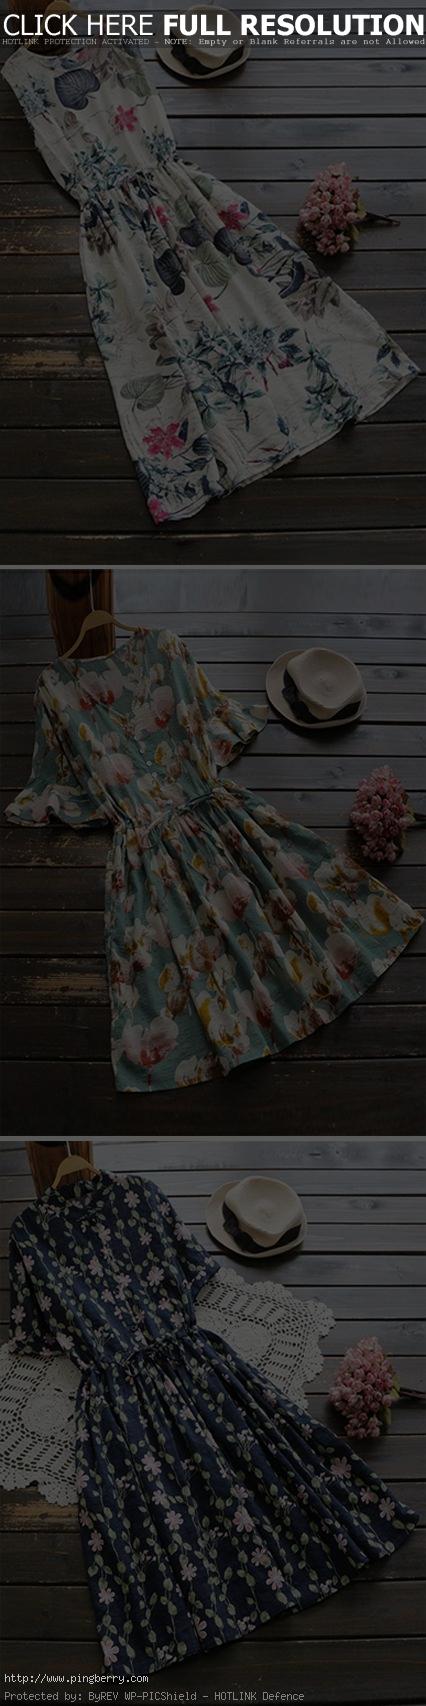 Summer dresses:Zaful,Maxi dresses,Bohemian dresses,Long sleeve dresses,Casual dr...